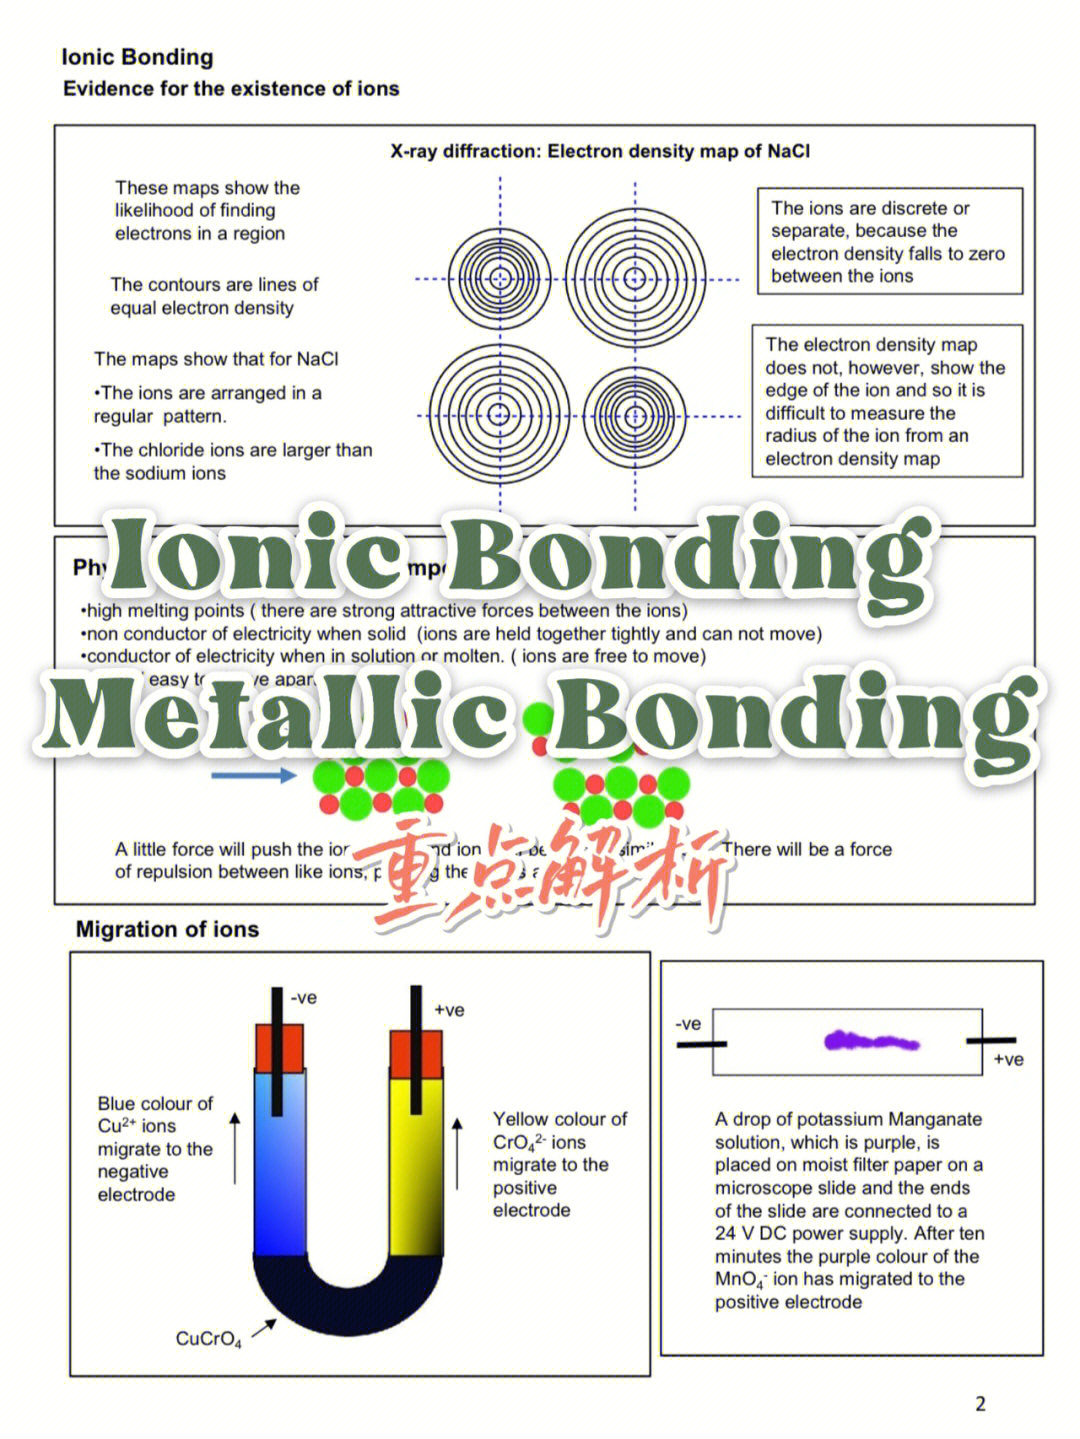 ionicbonding图片